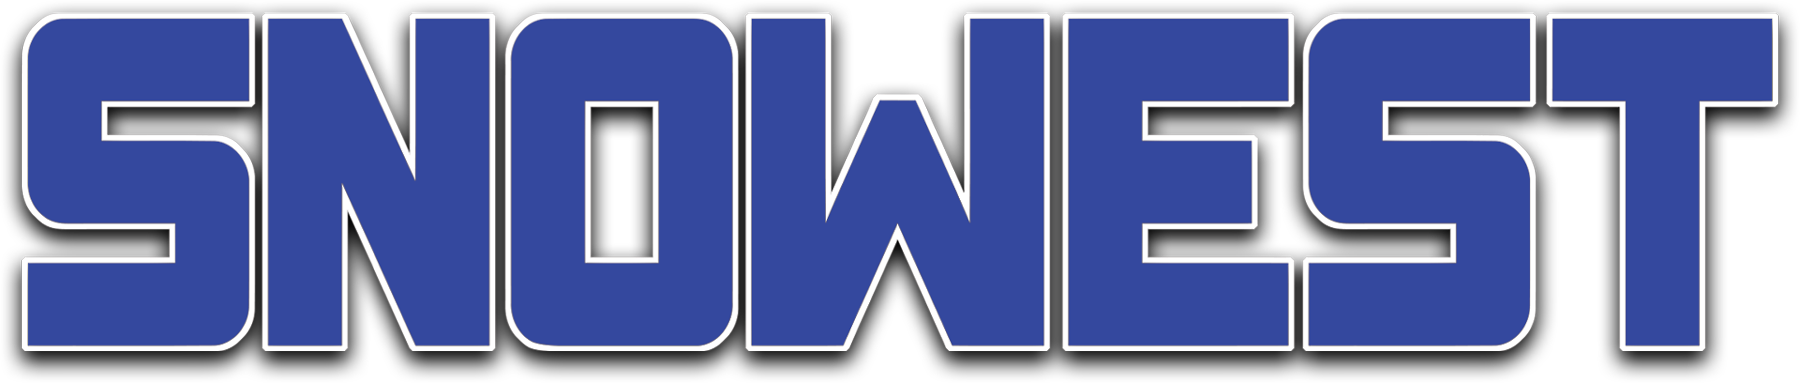 SnoWest logo